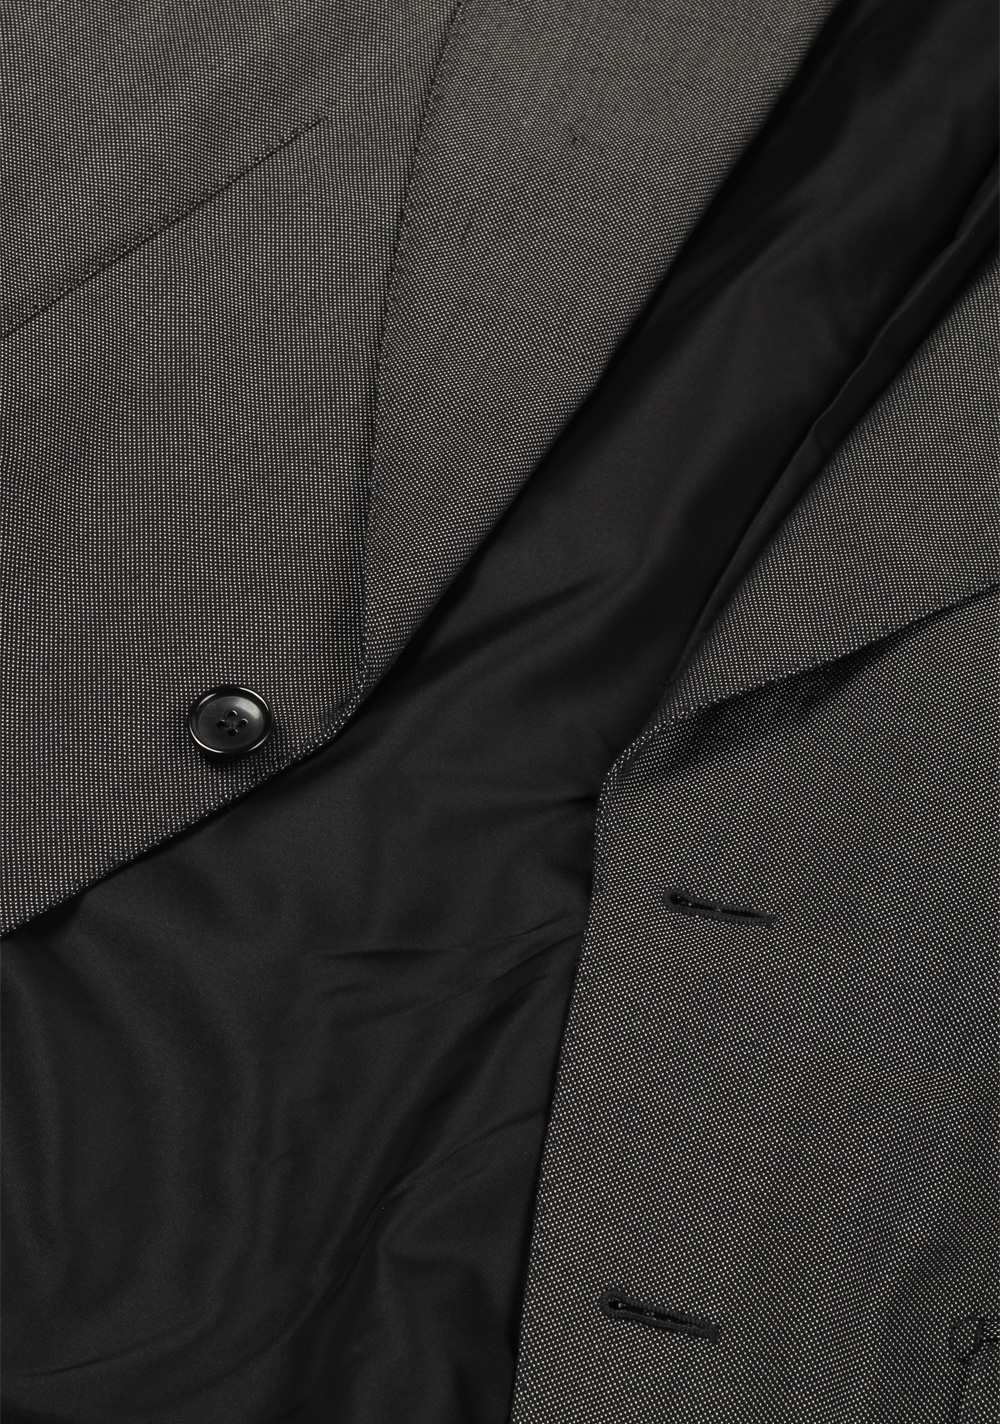 TOM FORD Buckley Gray Suit Size 46 / 36R U.S. Base V | Costume Limité